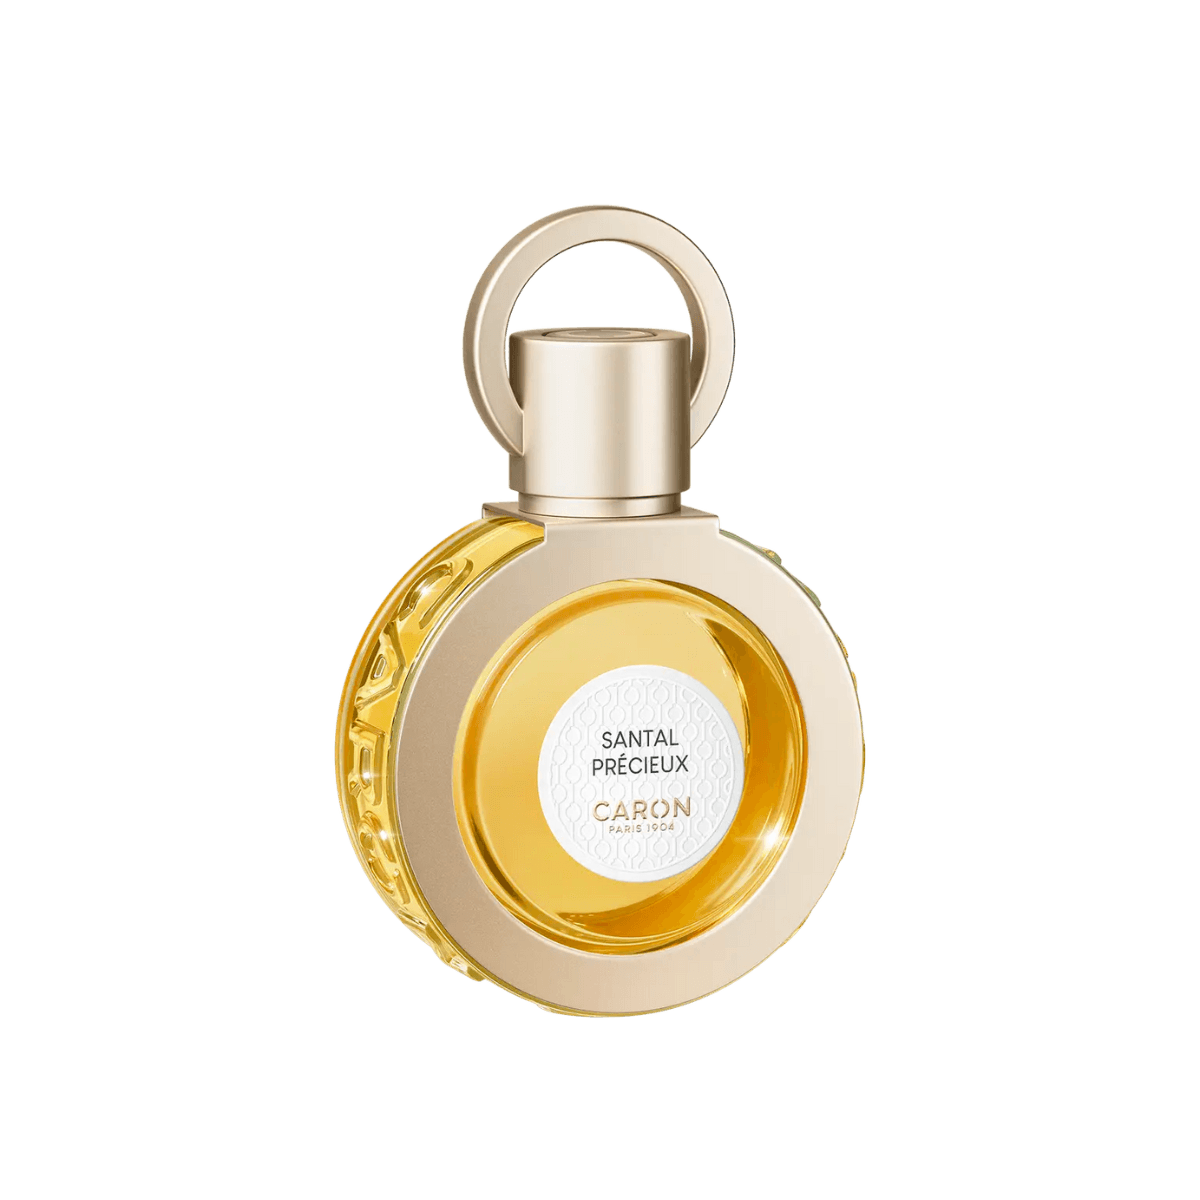 Image of Santal Precieux 50 ml by the perfume brand Caron